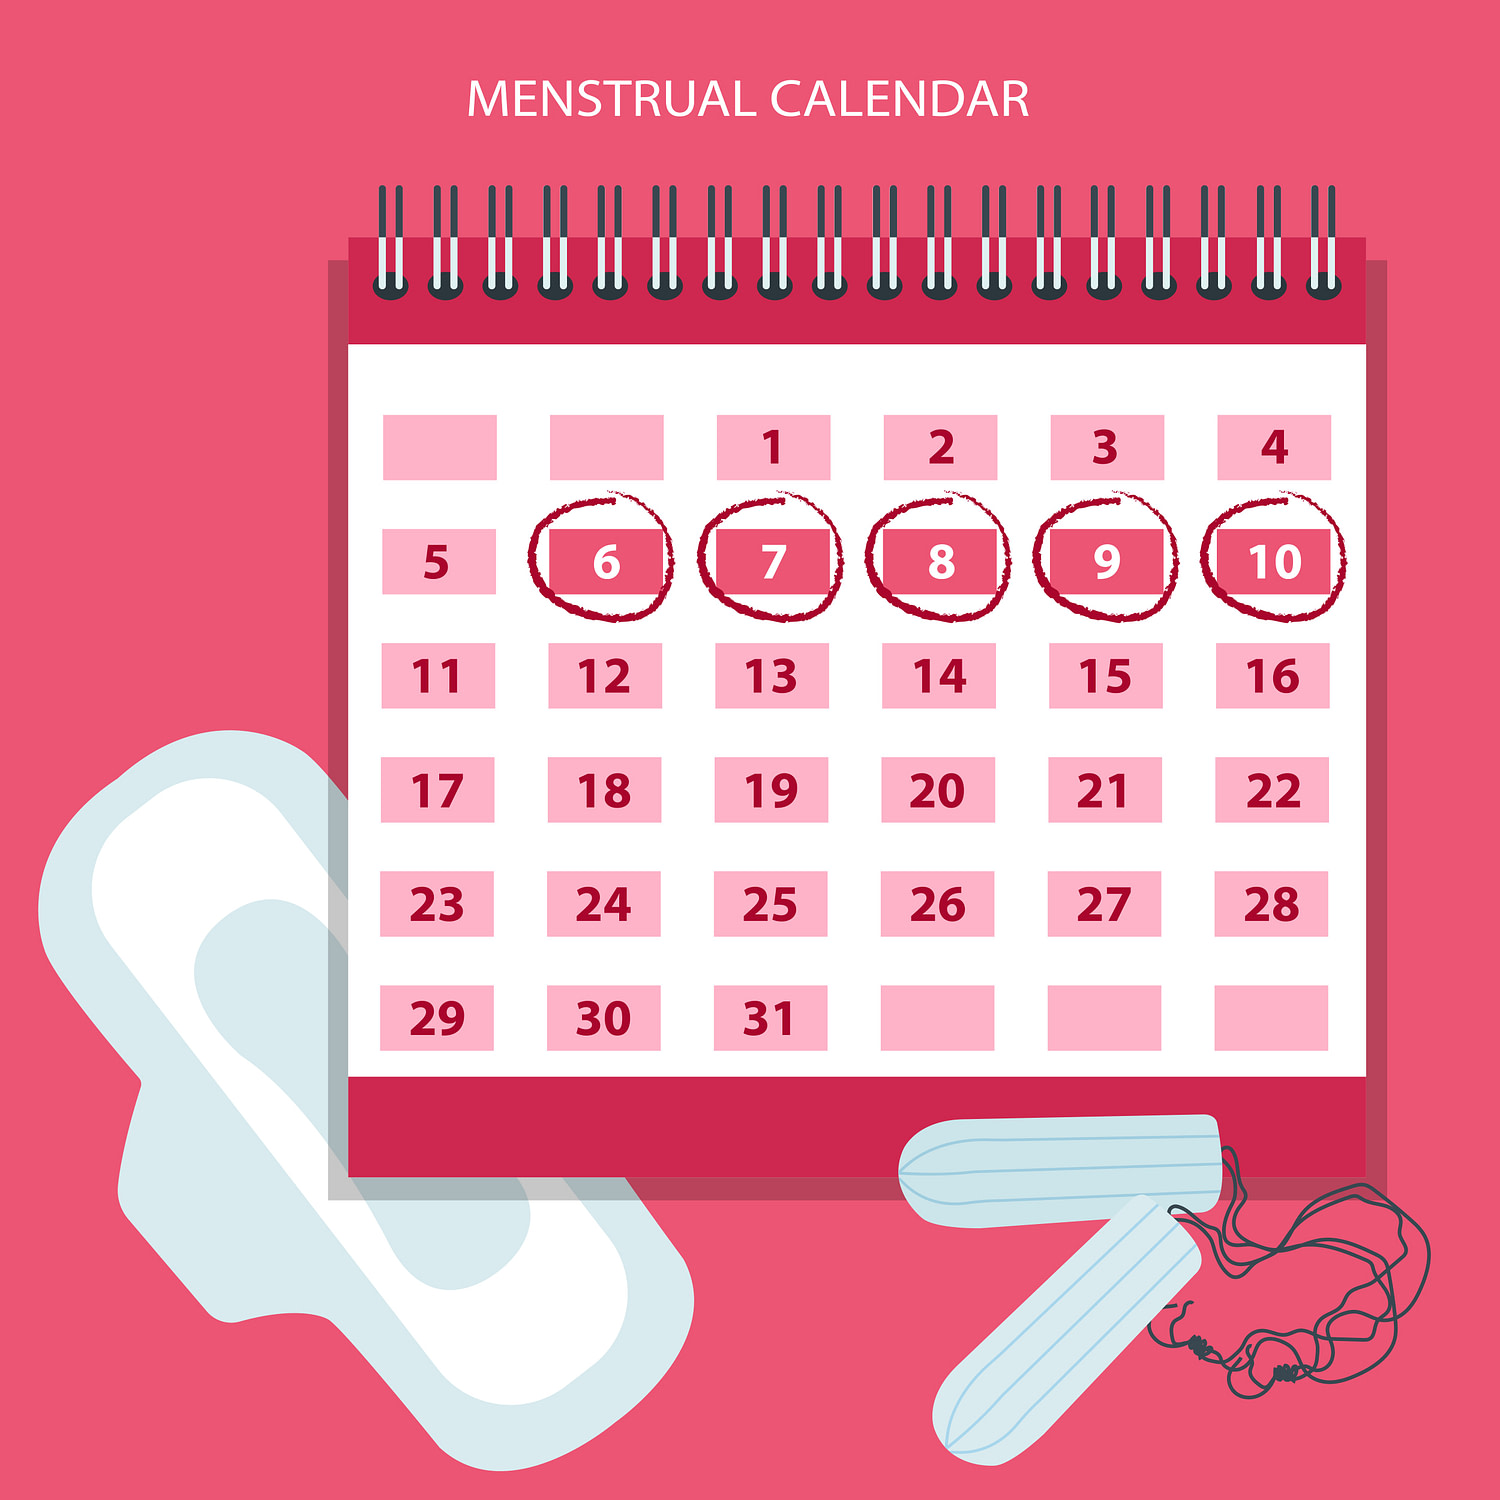 Menstrual Irregularities